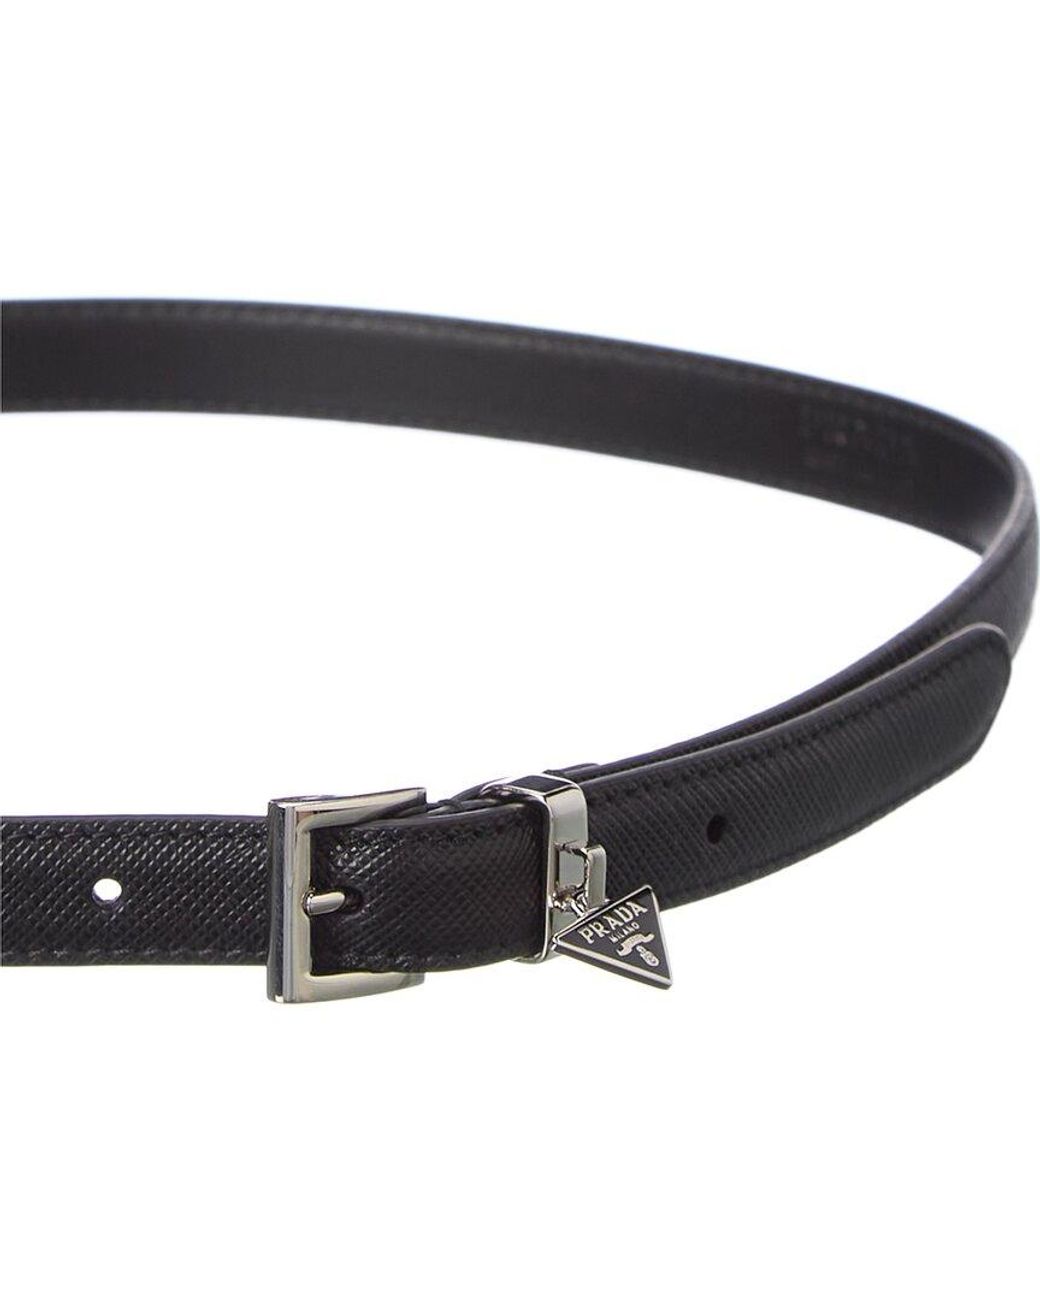 Prada Black leather belt with logo